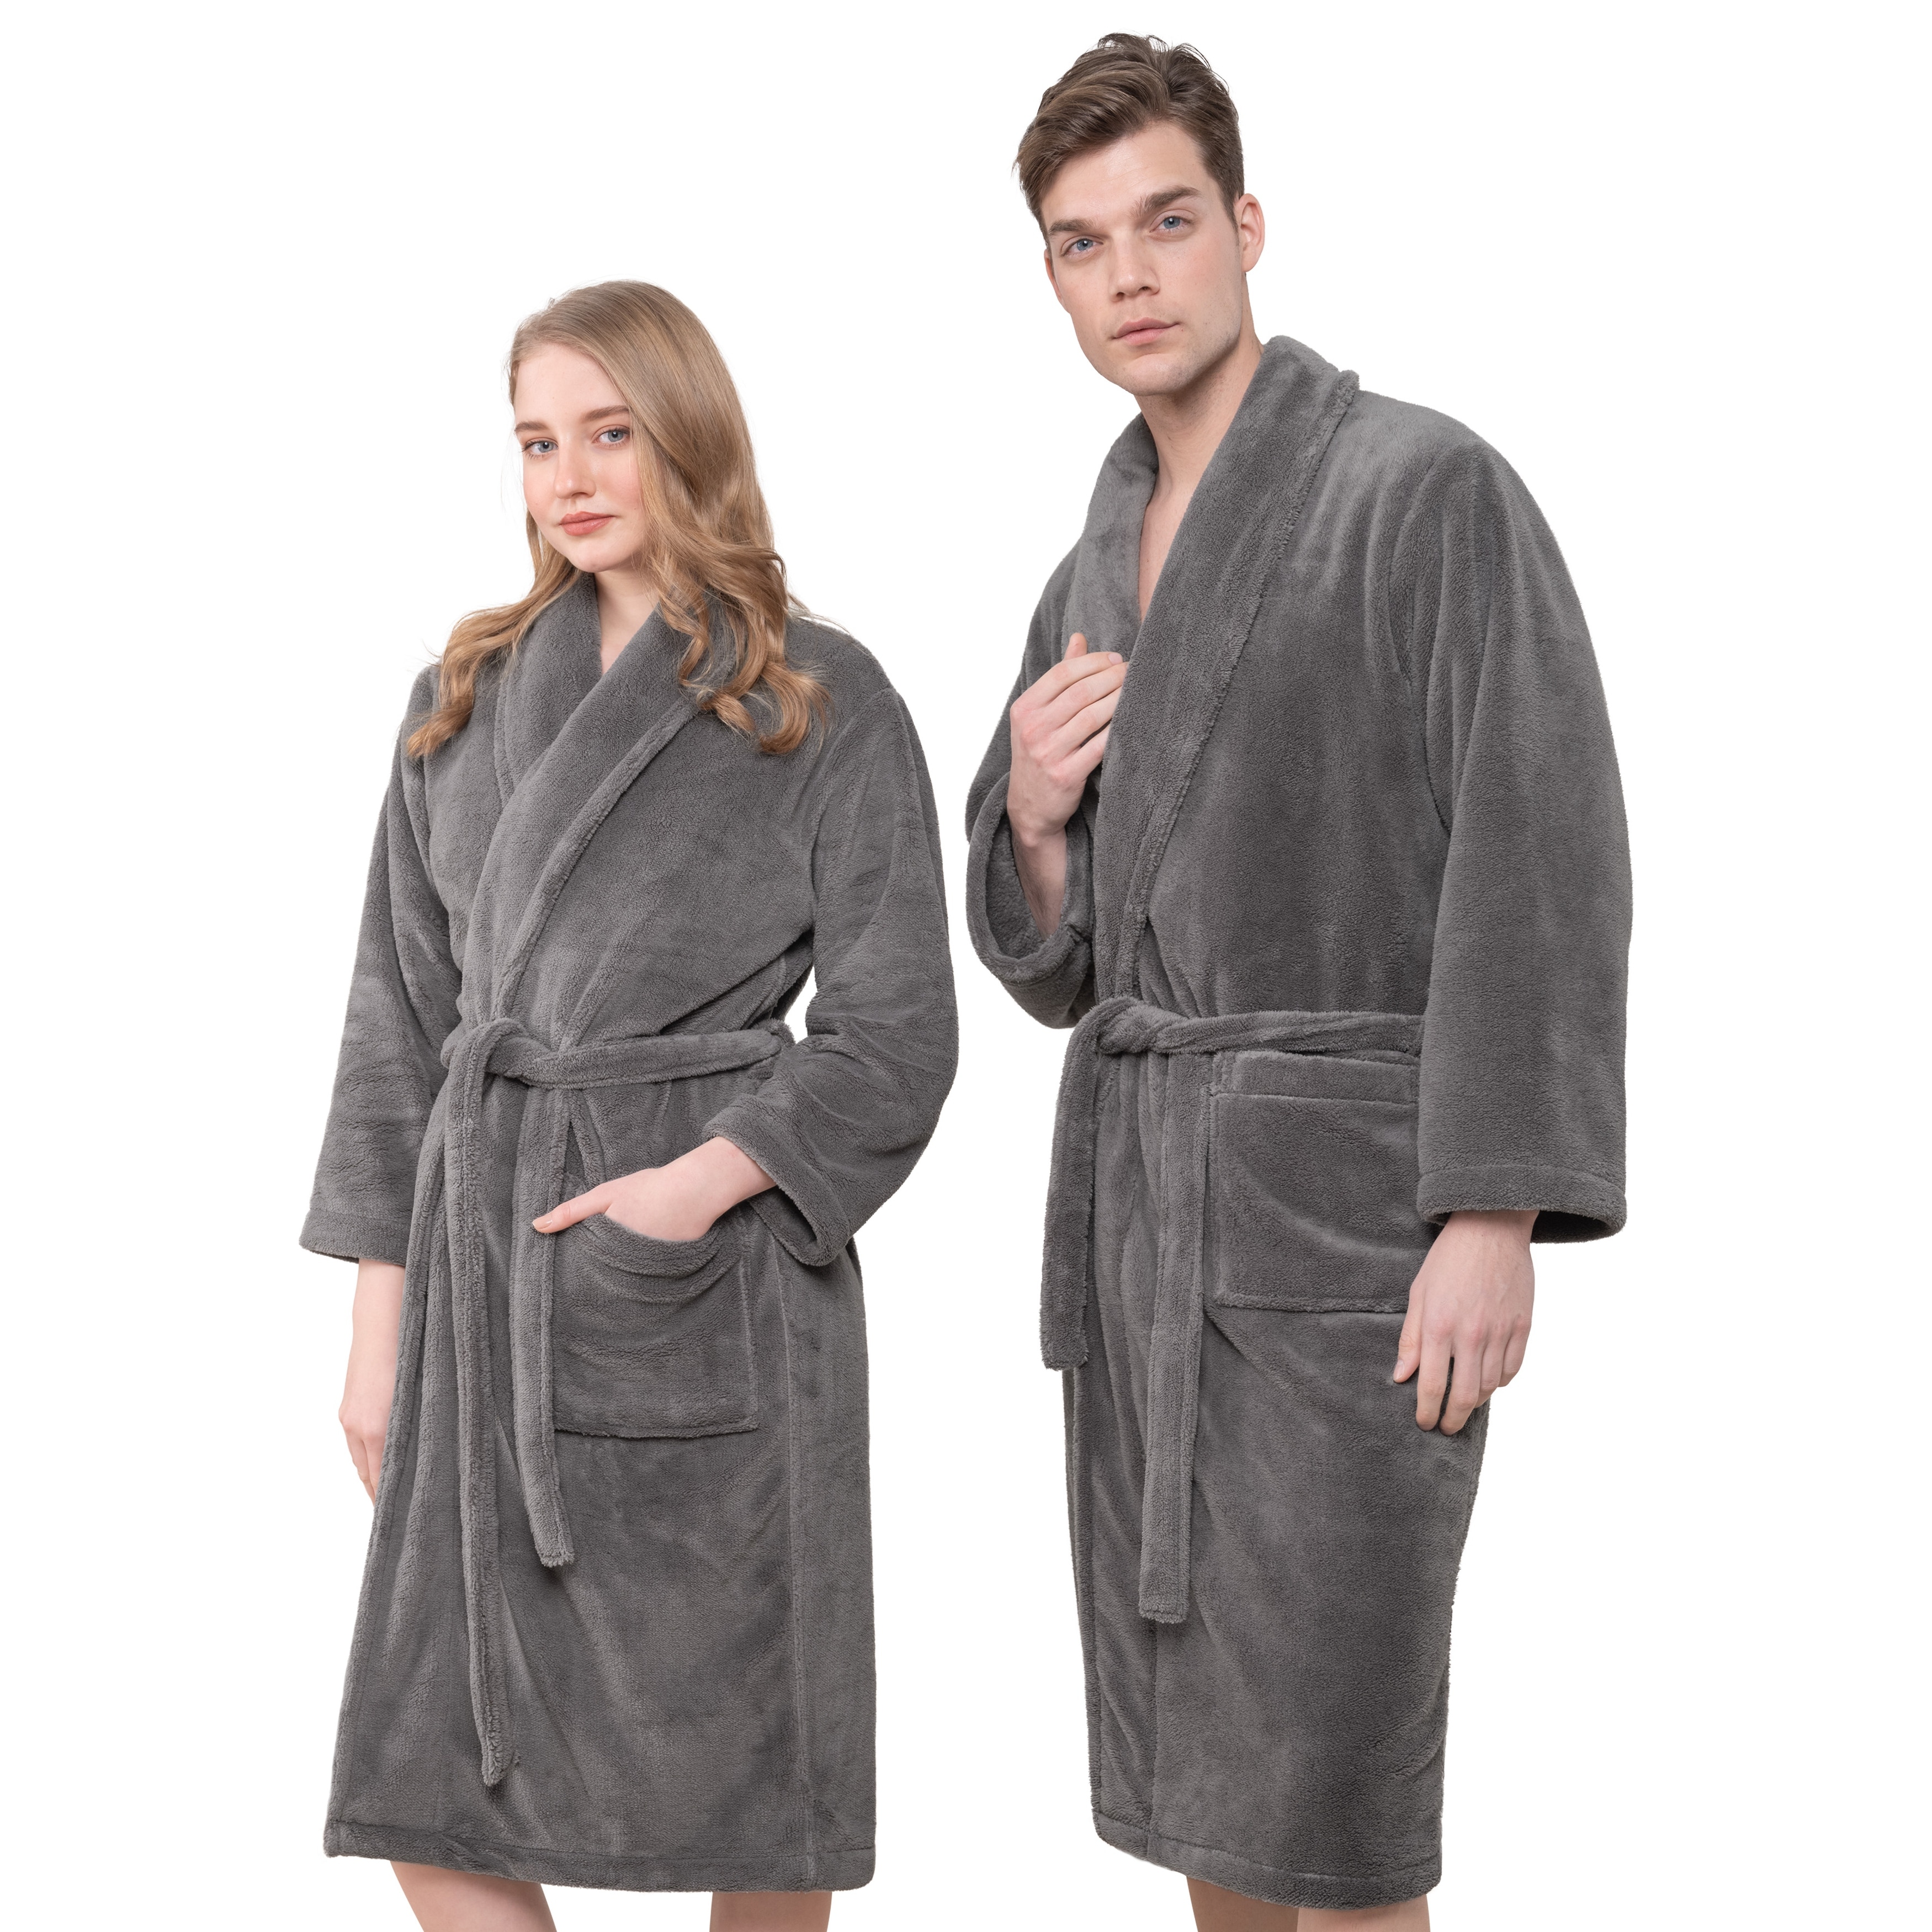 dokly Men's Satin Robe, Men's Shawl Collar Luxurious Silk Kimono Lightweight  Bathrobe with Pockets,Navy blue,3XL at Amazon Men's Clothing store